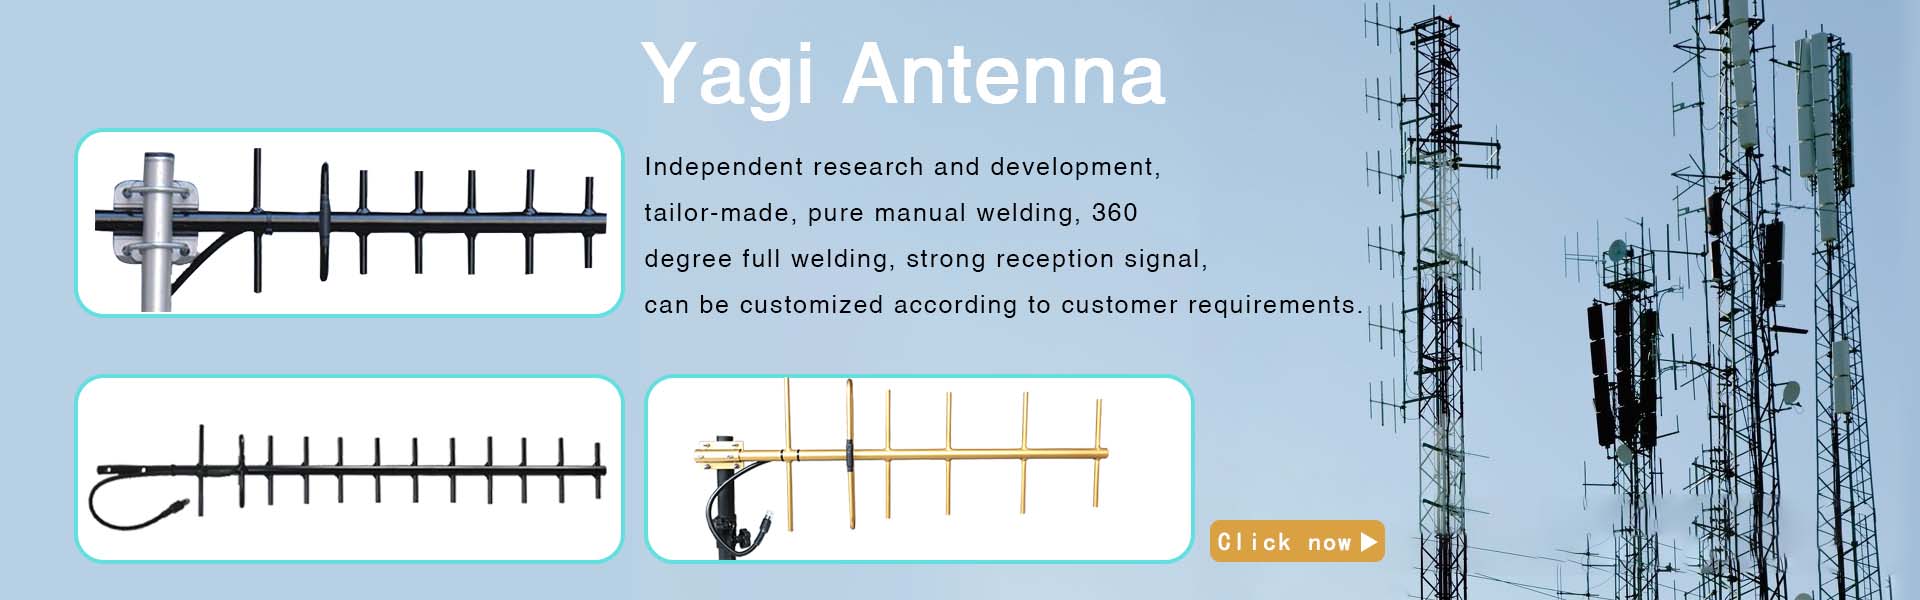 YAGI antenna